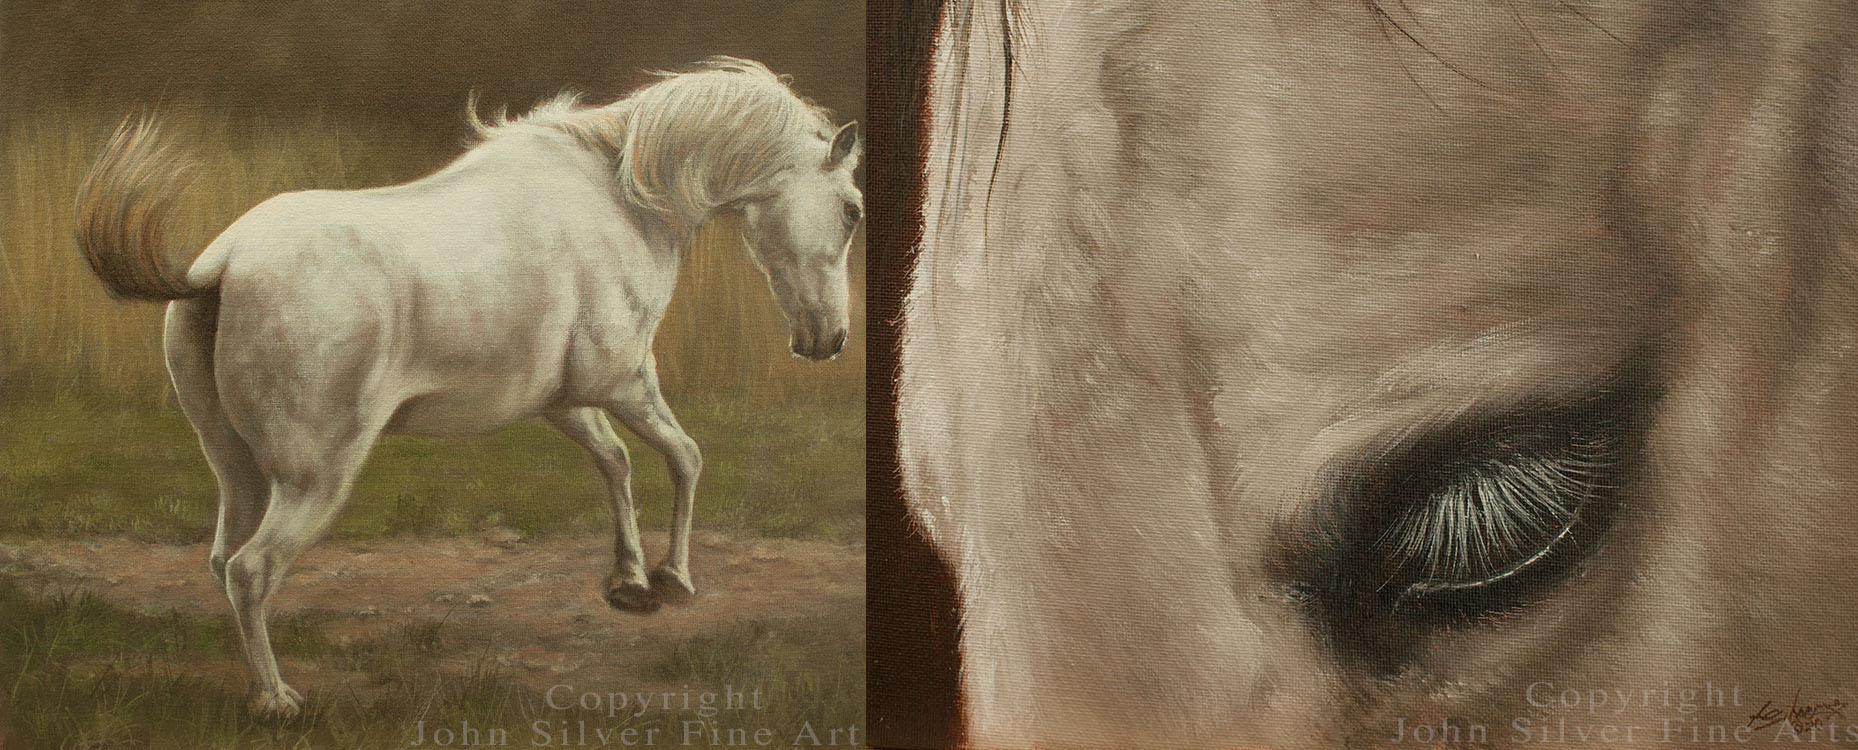 Shropshire Equestrian Artist John Silver, Horse Oil Paintings On Canvas